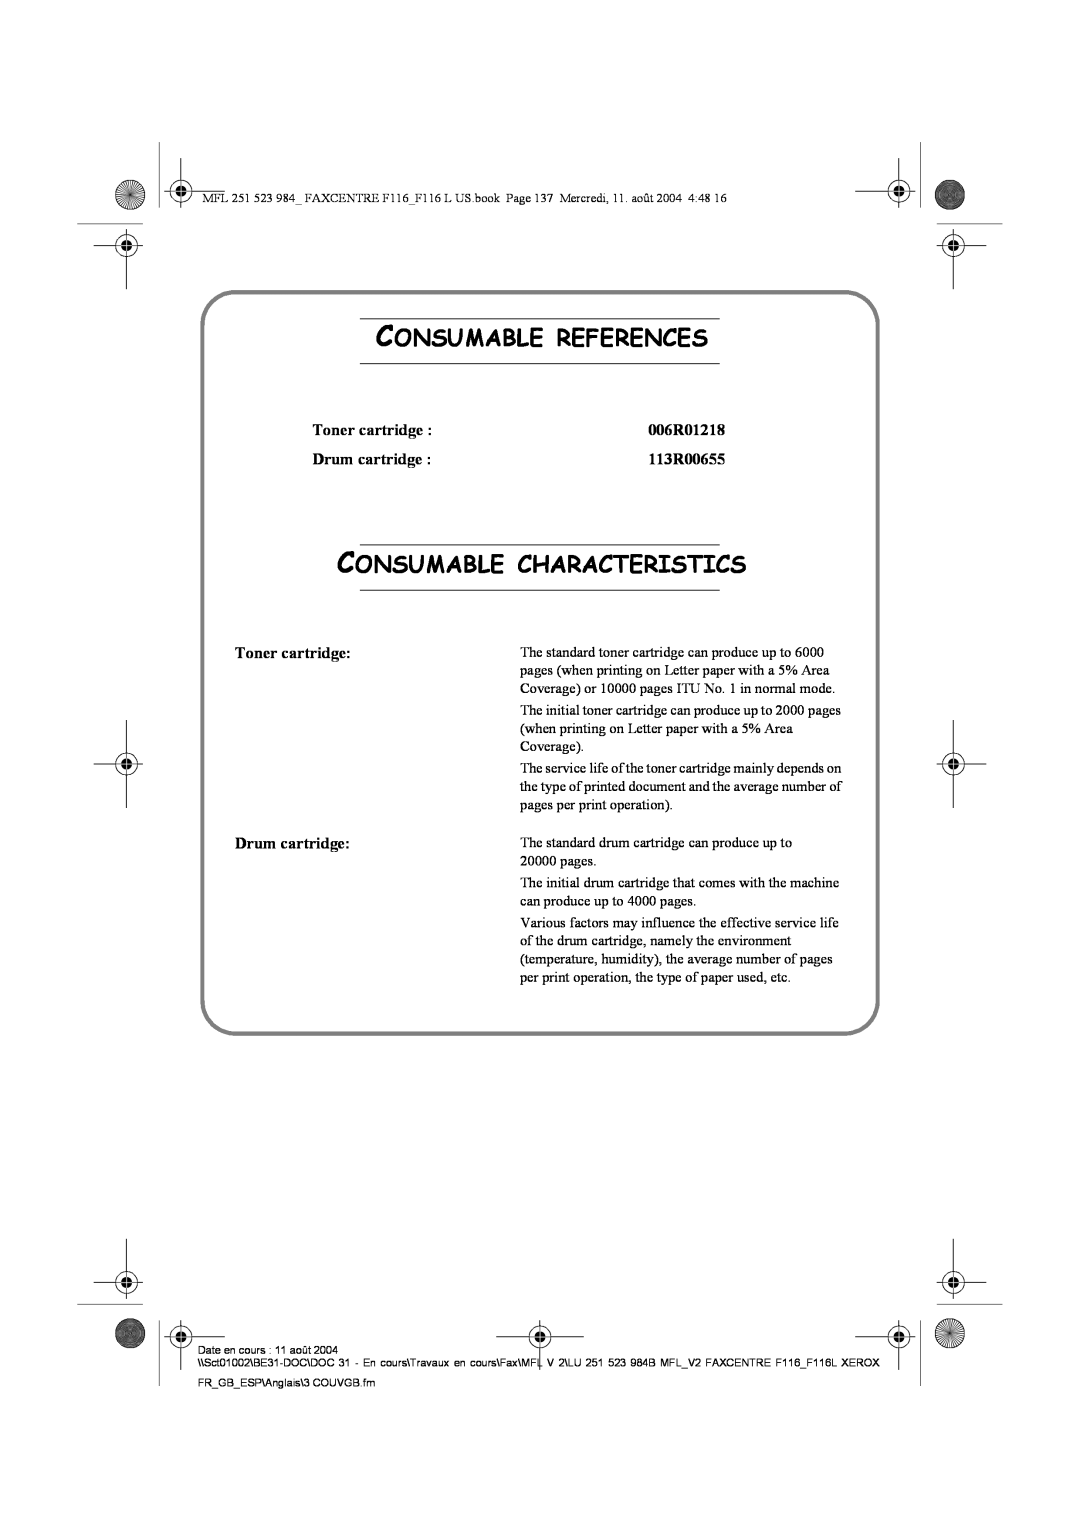 Xerox F116 Consumable References, Consumable Characteristics, Toner cartridge, 006R01218, Drum cartridge, 113R00655 